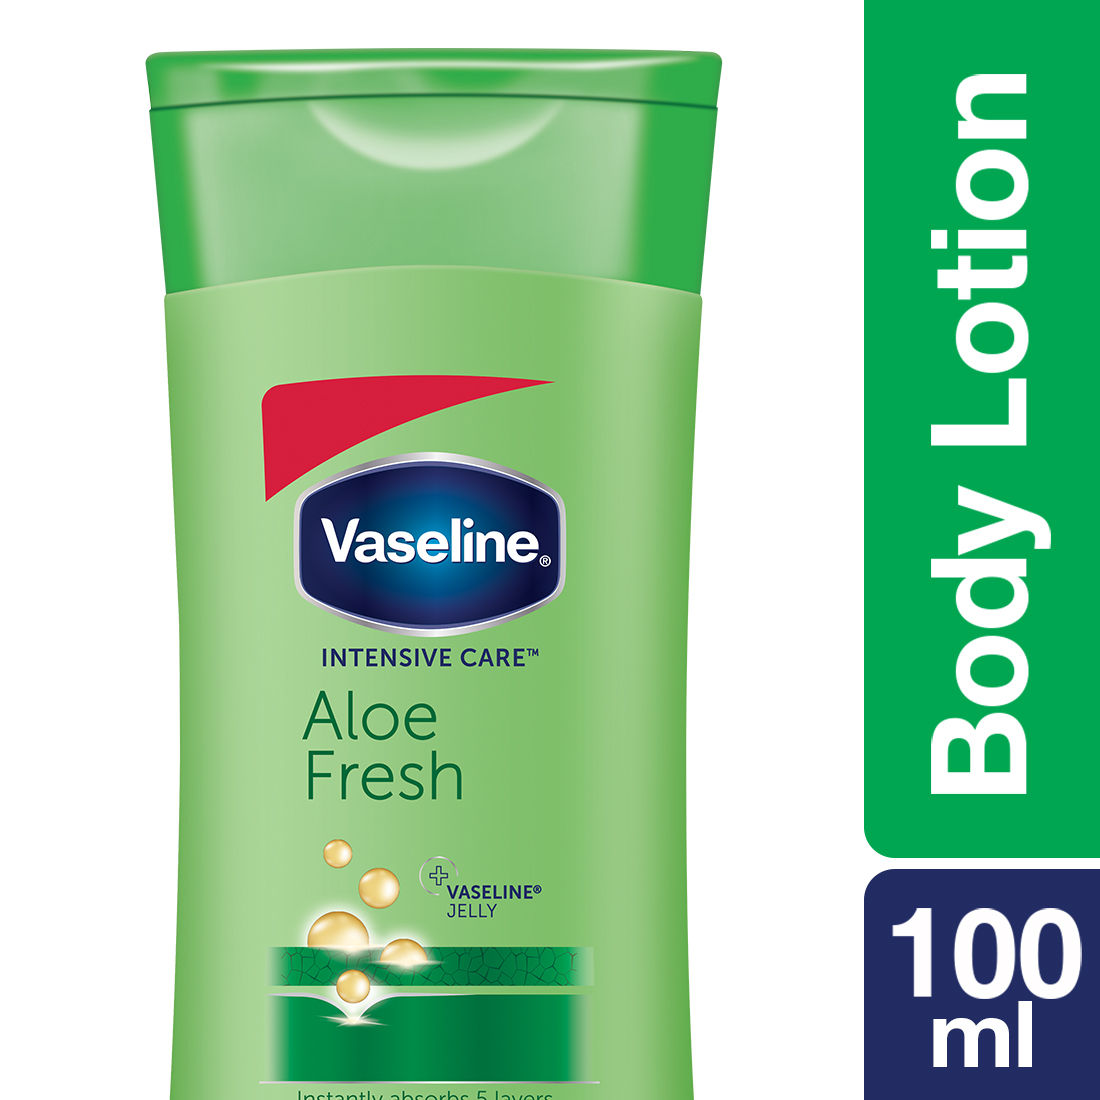 Vaseline Intensive Care Aloe Fresh Body Lotion, 100 ml, Pack of 1 